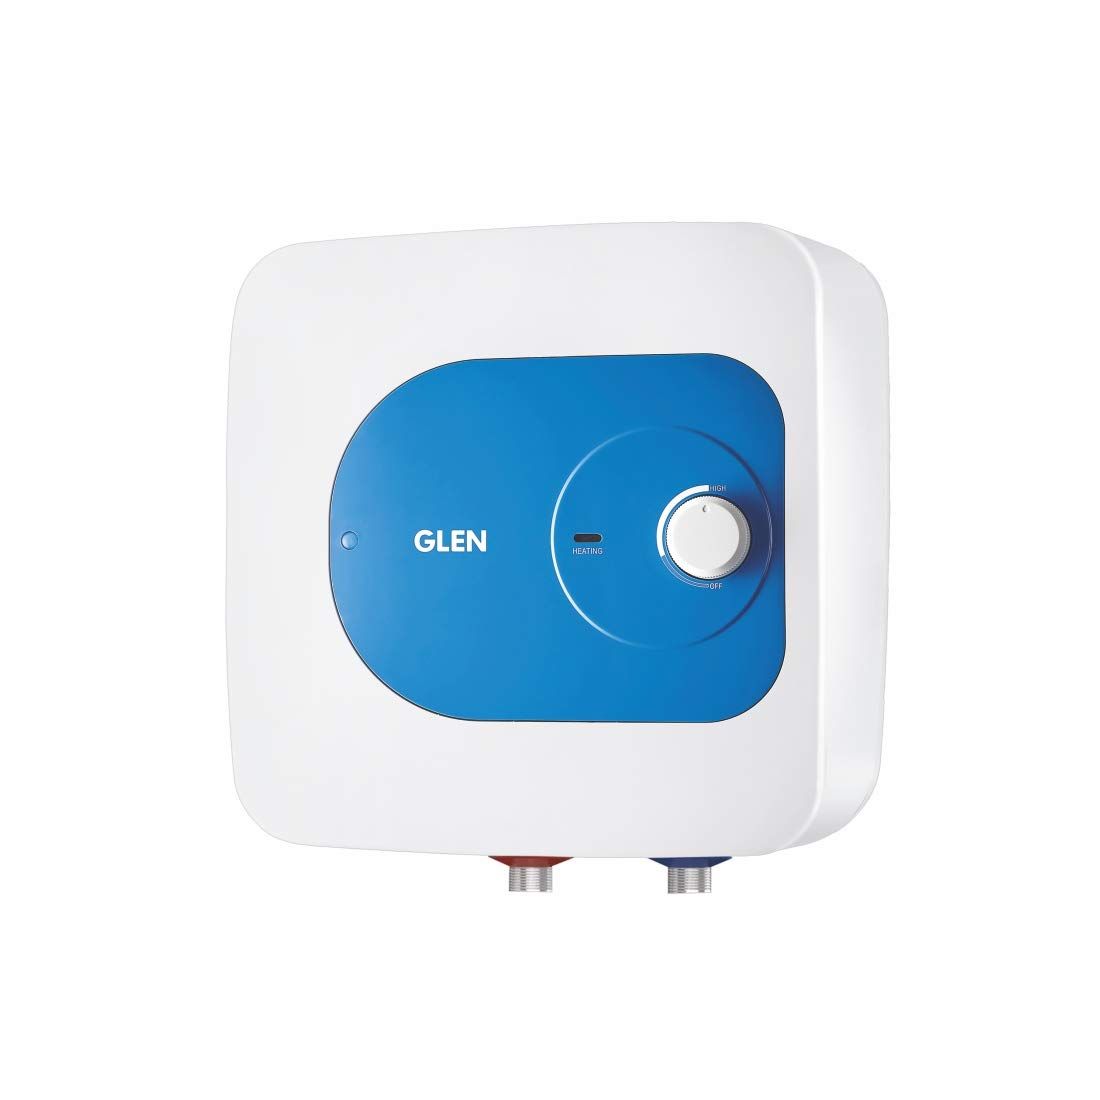 Glen 25 L Square Water Heater 2000 Watt (WH-705425LM)